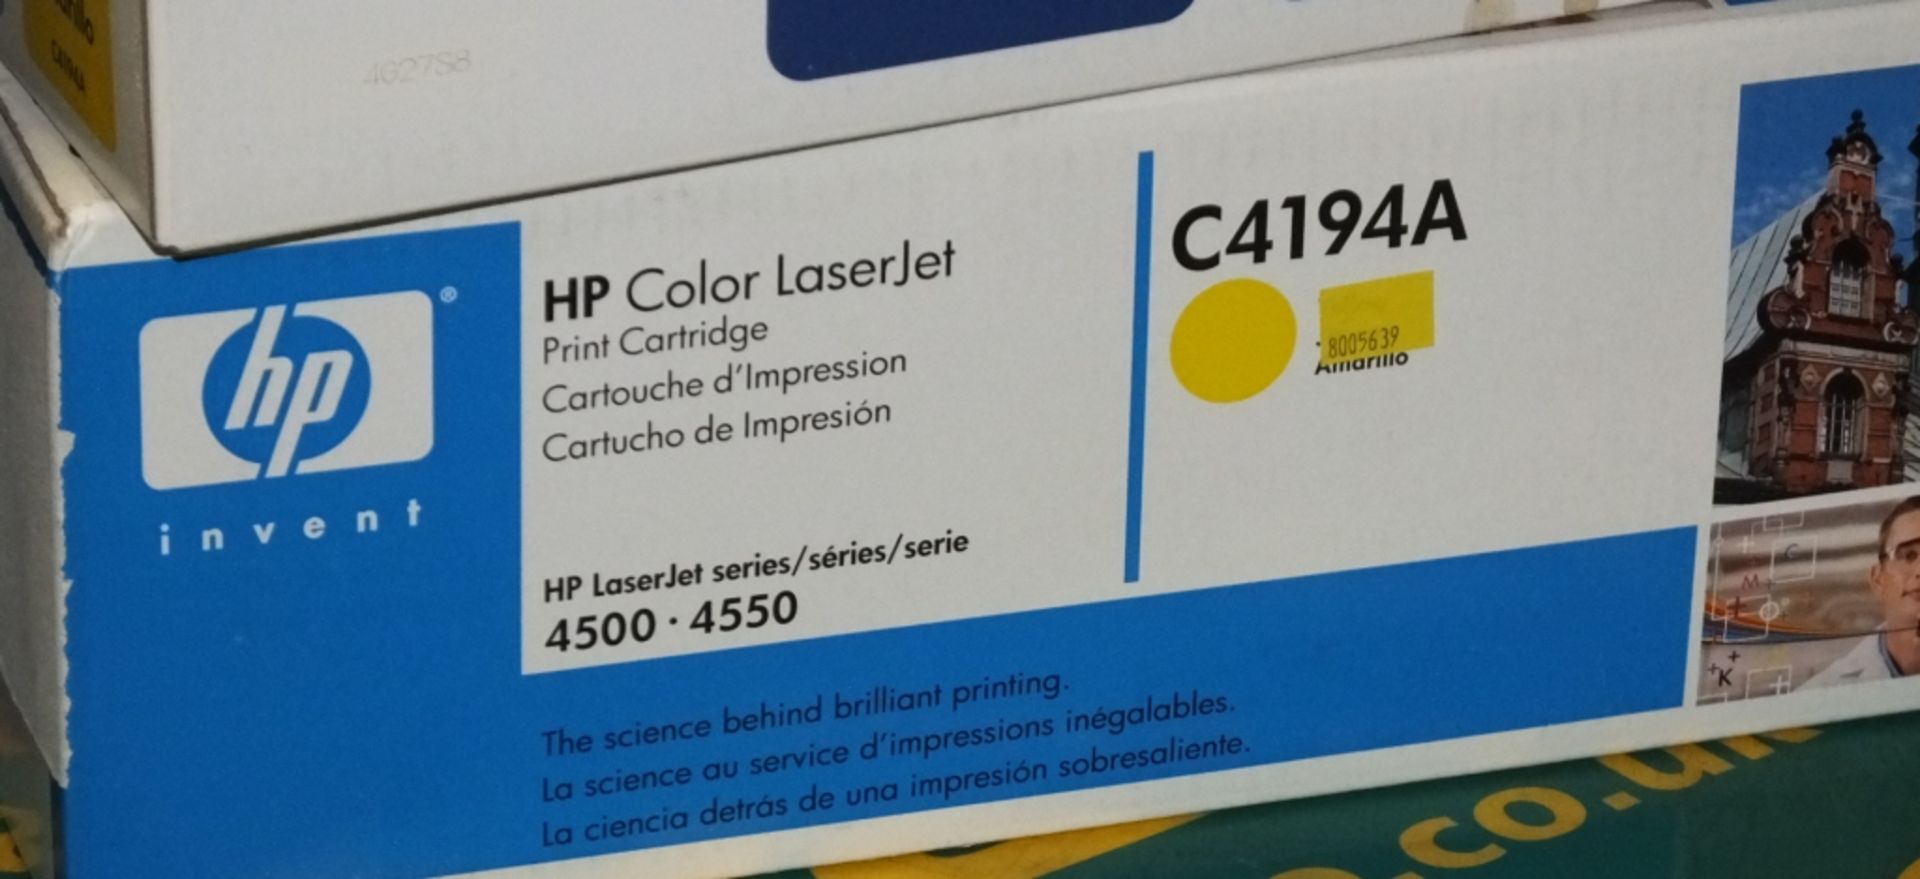 4x HP C4194A Printer cartridges - Yellow - Image 2 of 2